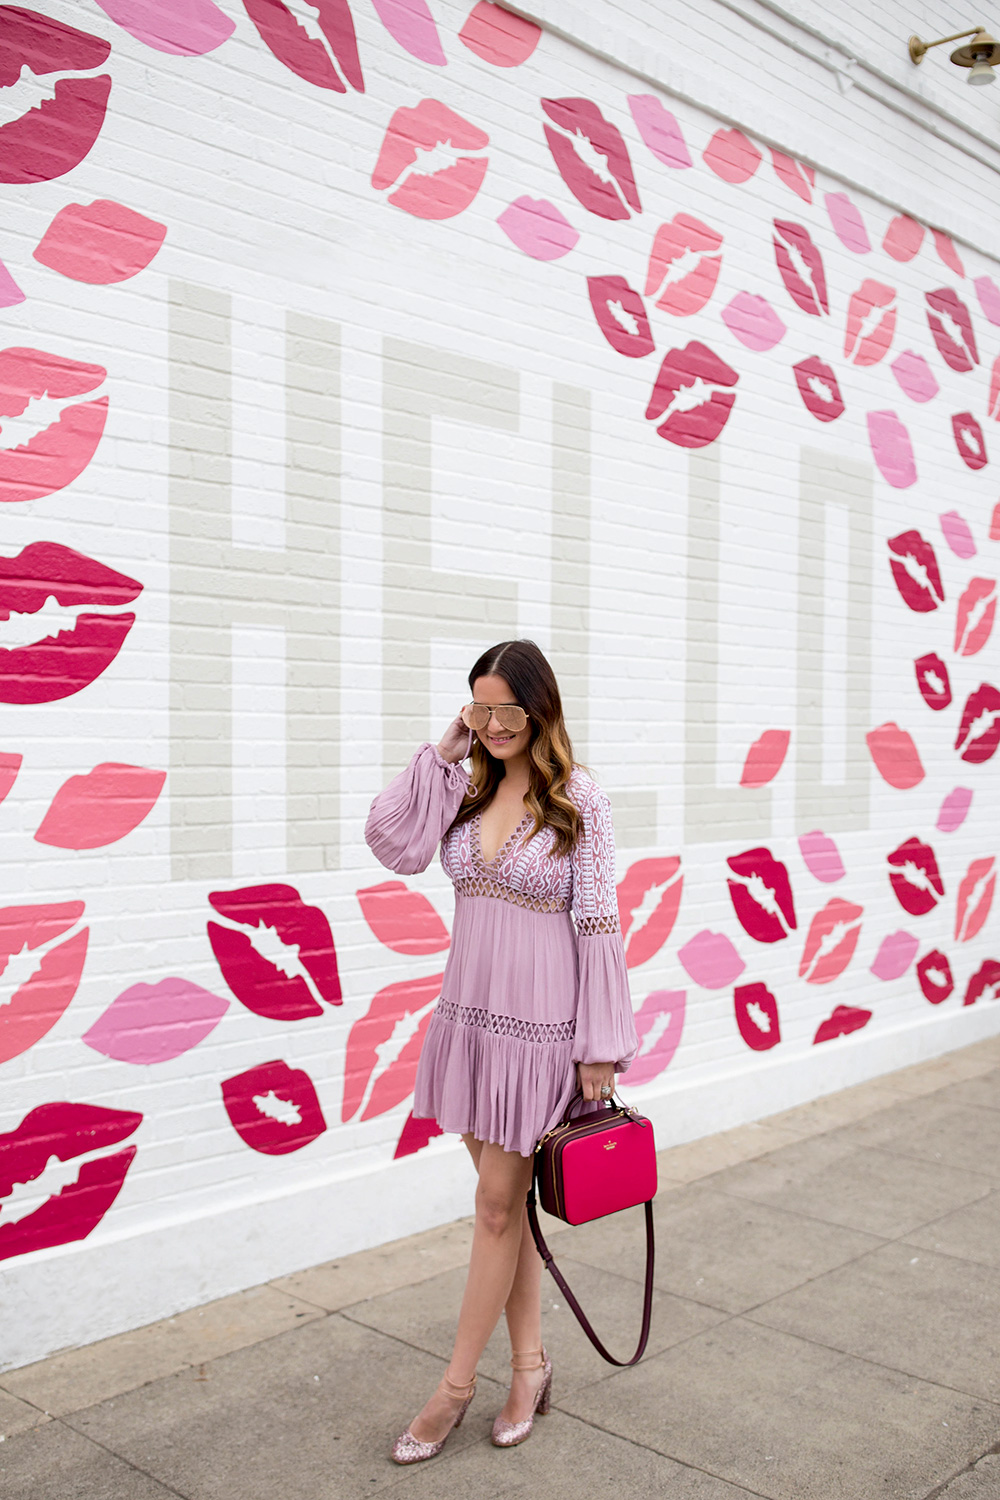 Lips Wall Mural Los Angeles